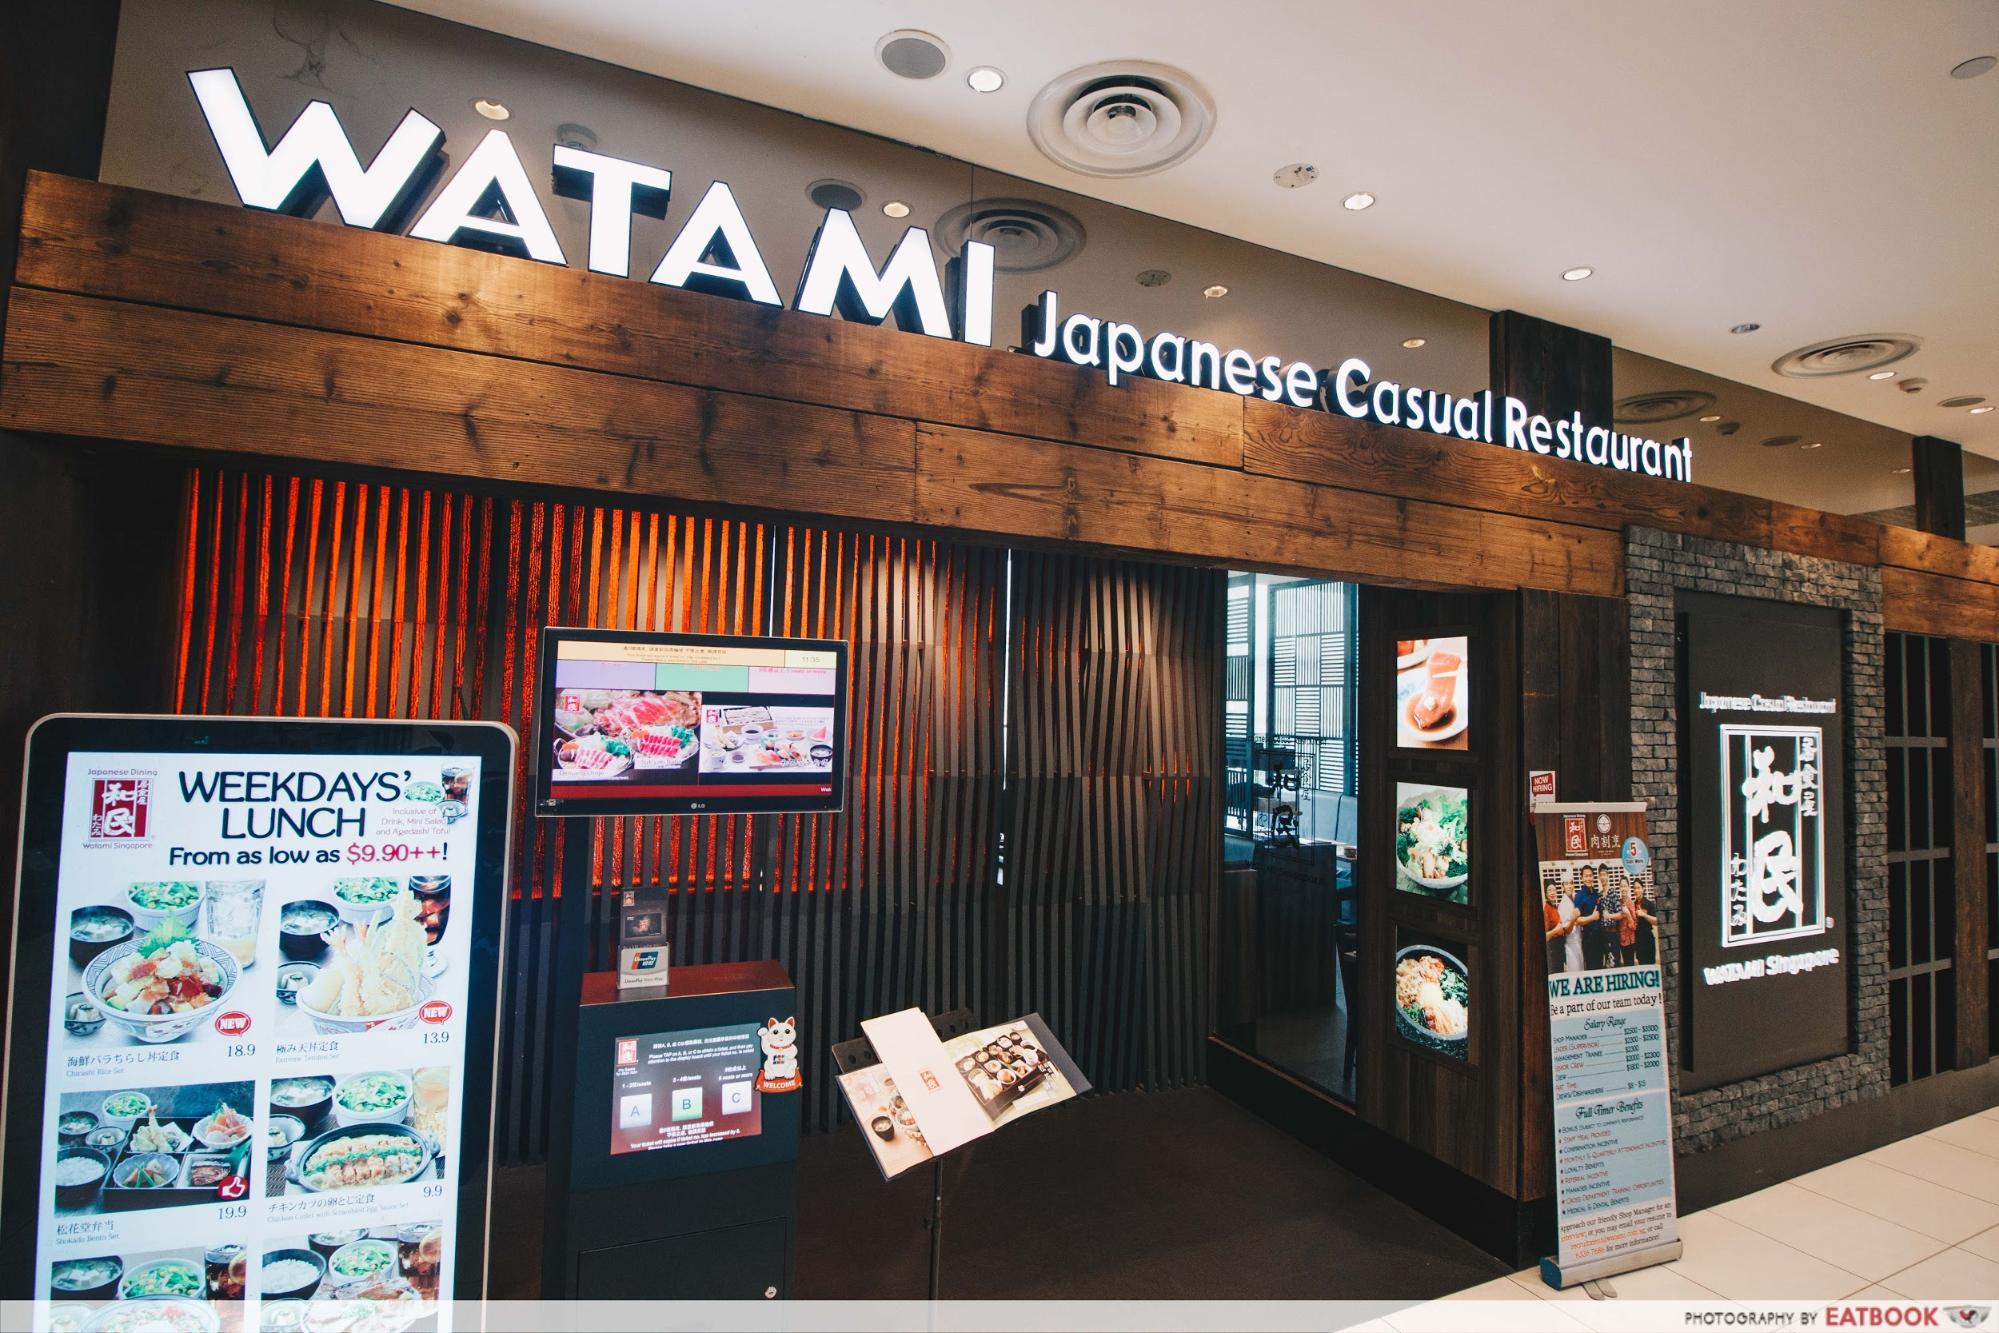 New Restaurant City Square Mall - Watami